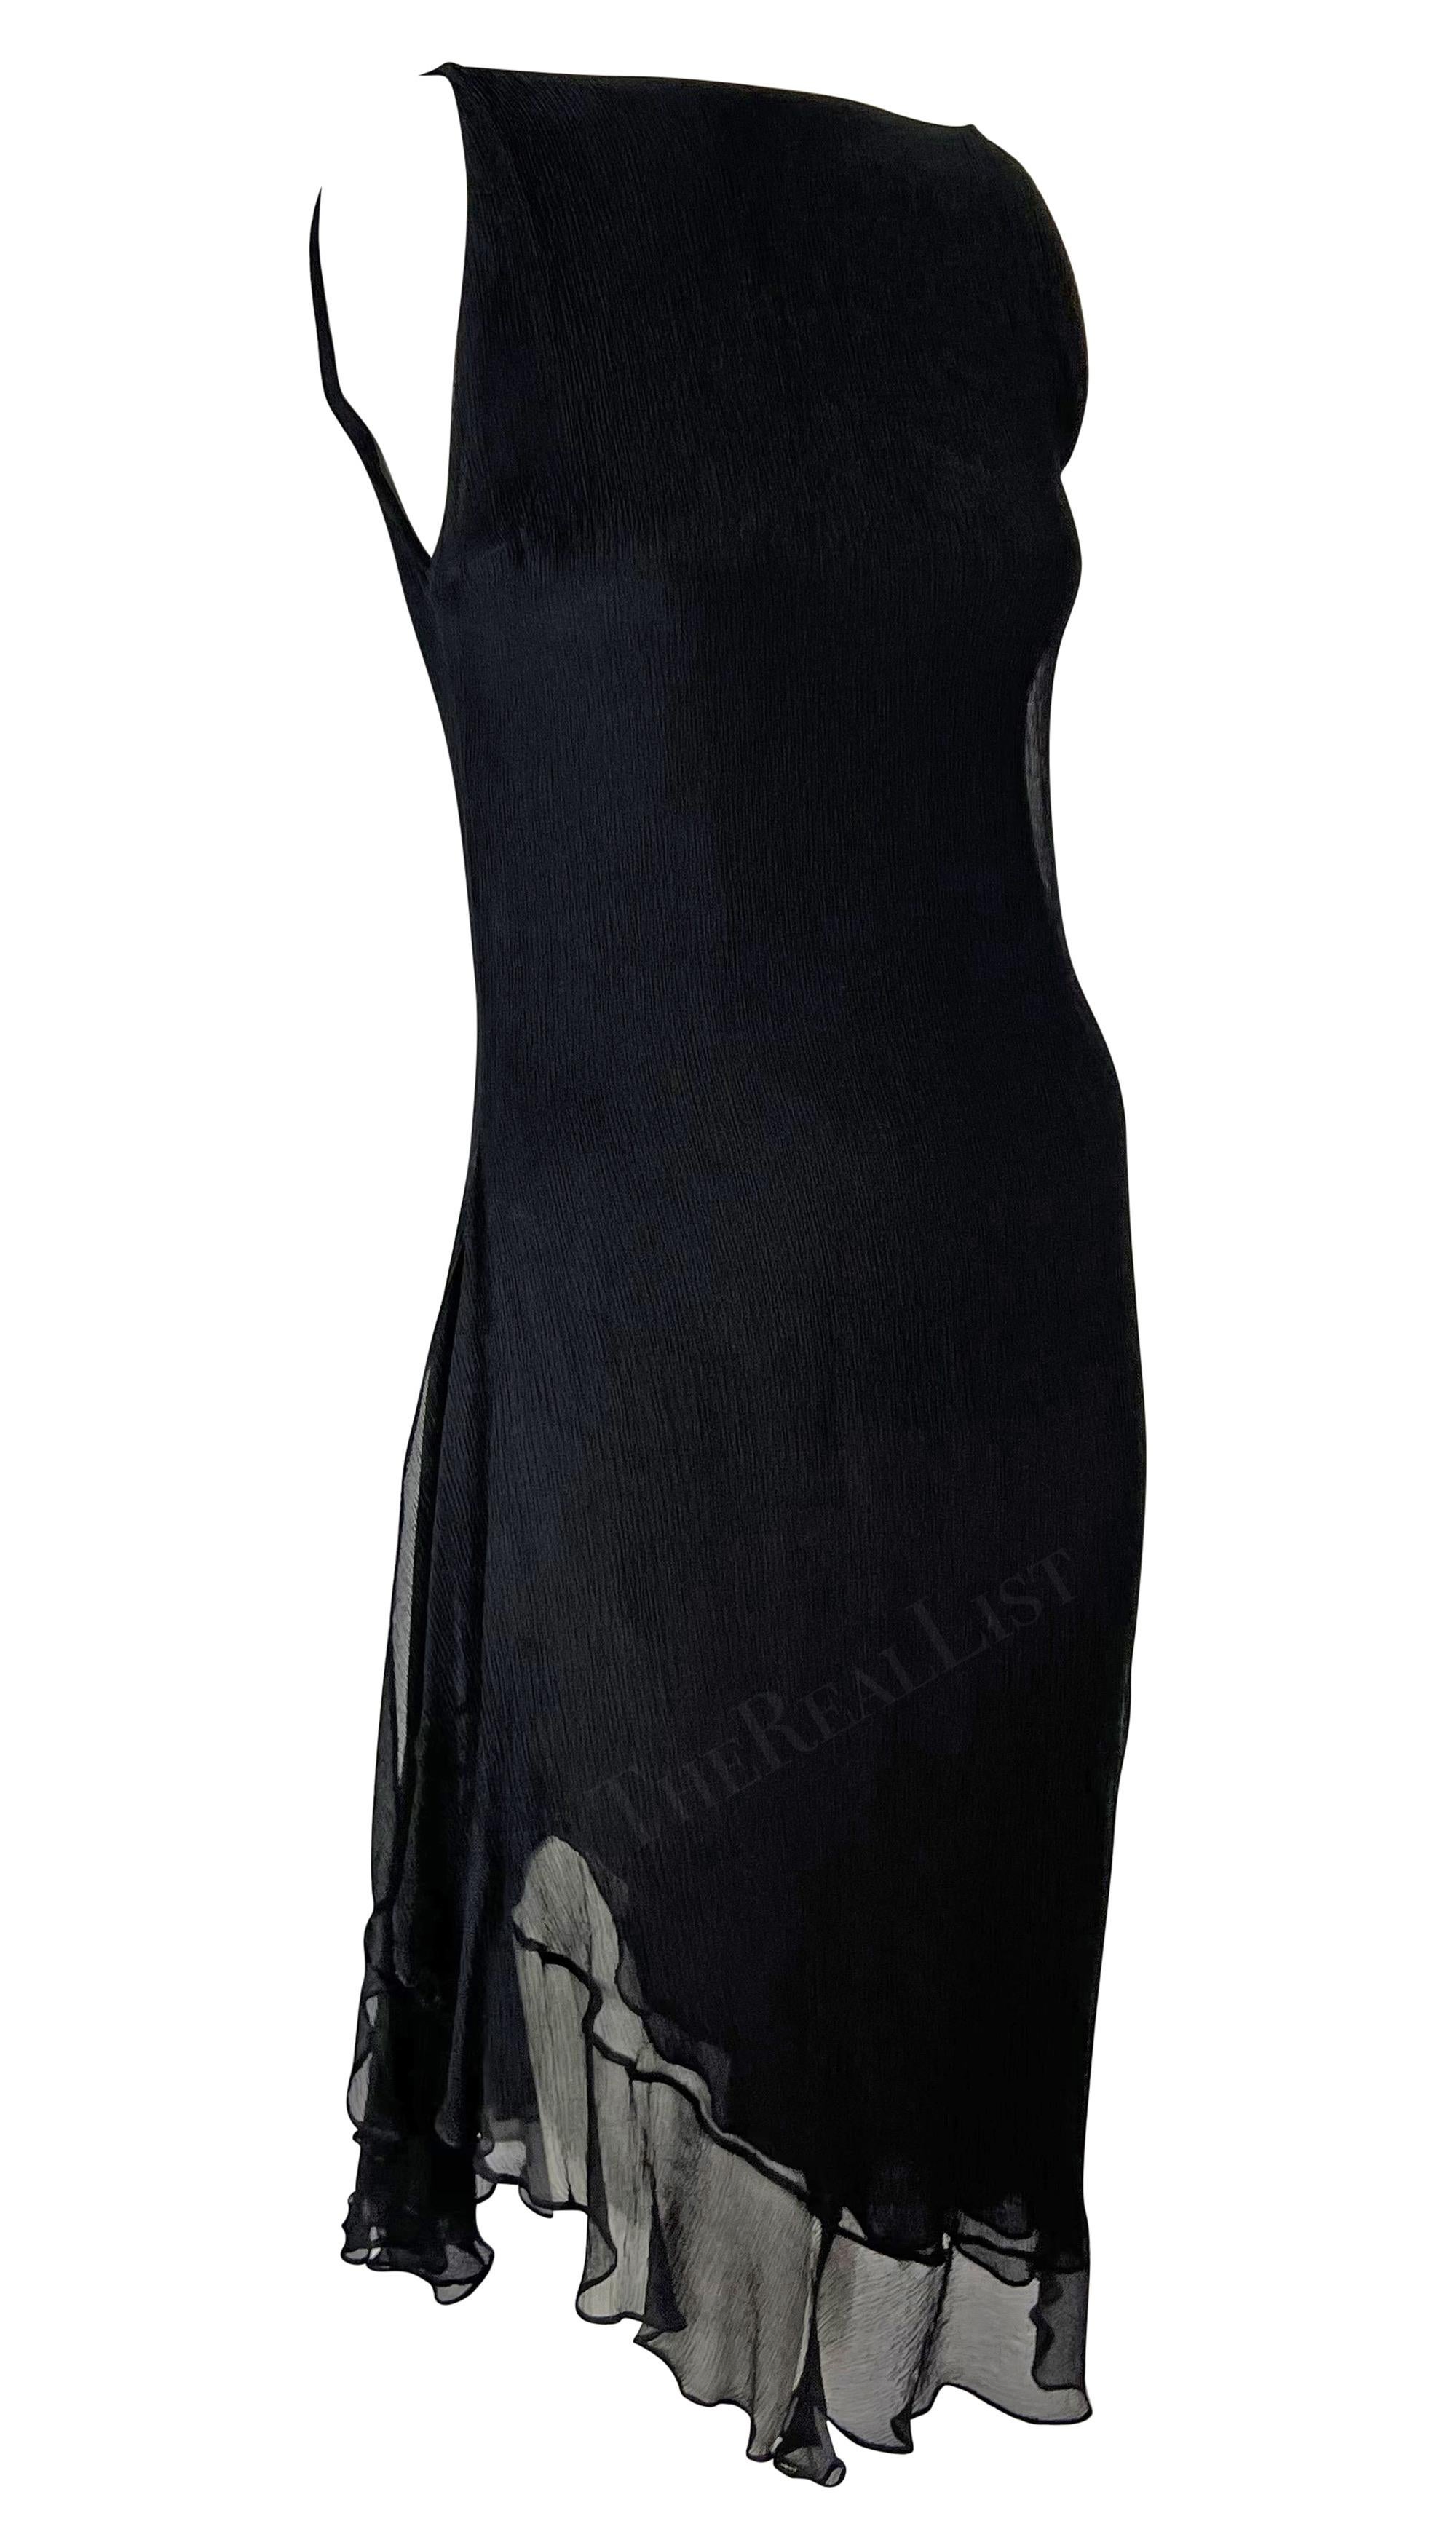 S/S 2000 Gucci by Tom Ford Black Crepe Silk Chiffon Ruffle Dress 3